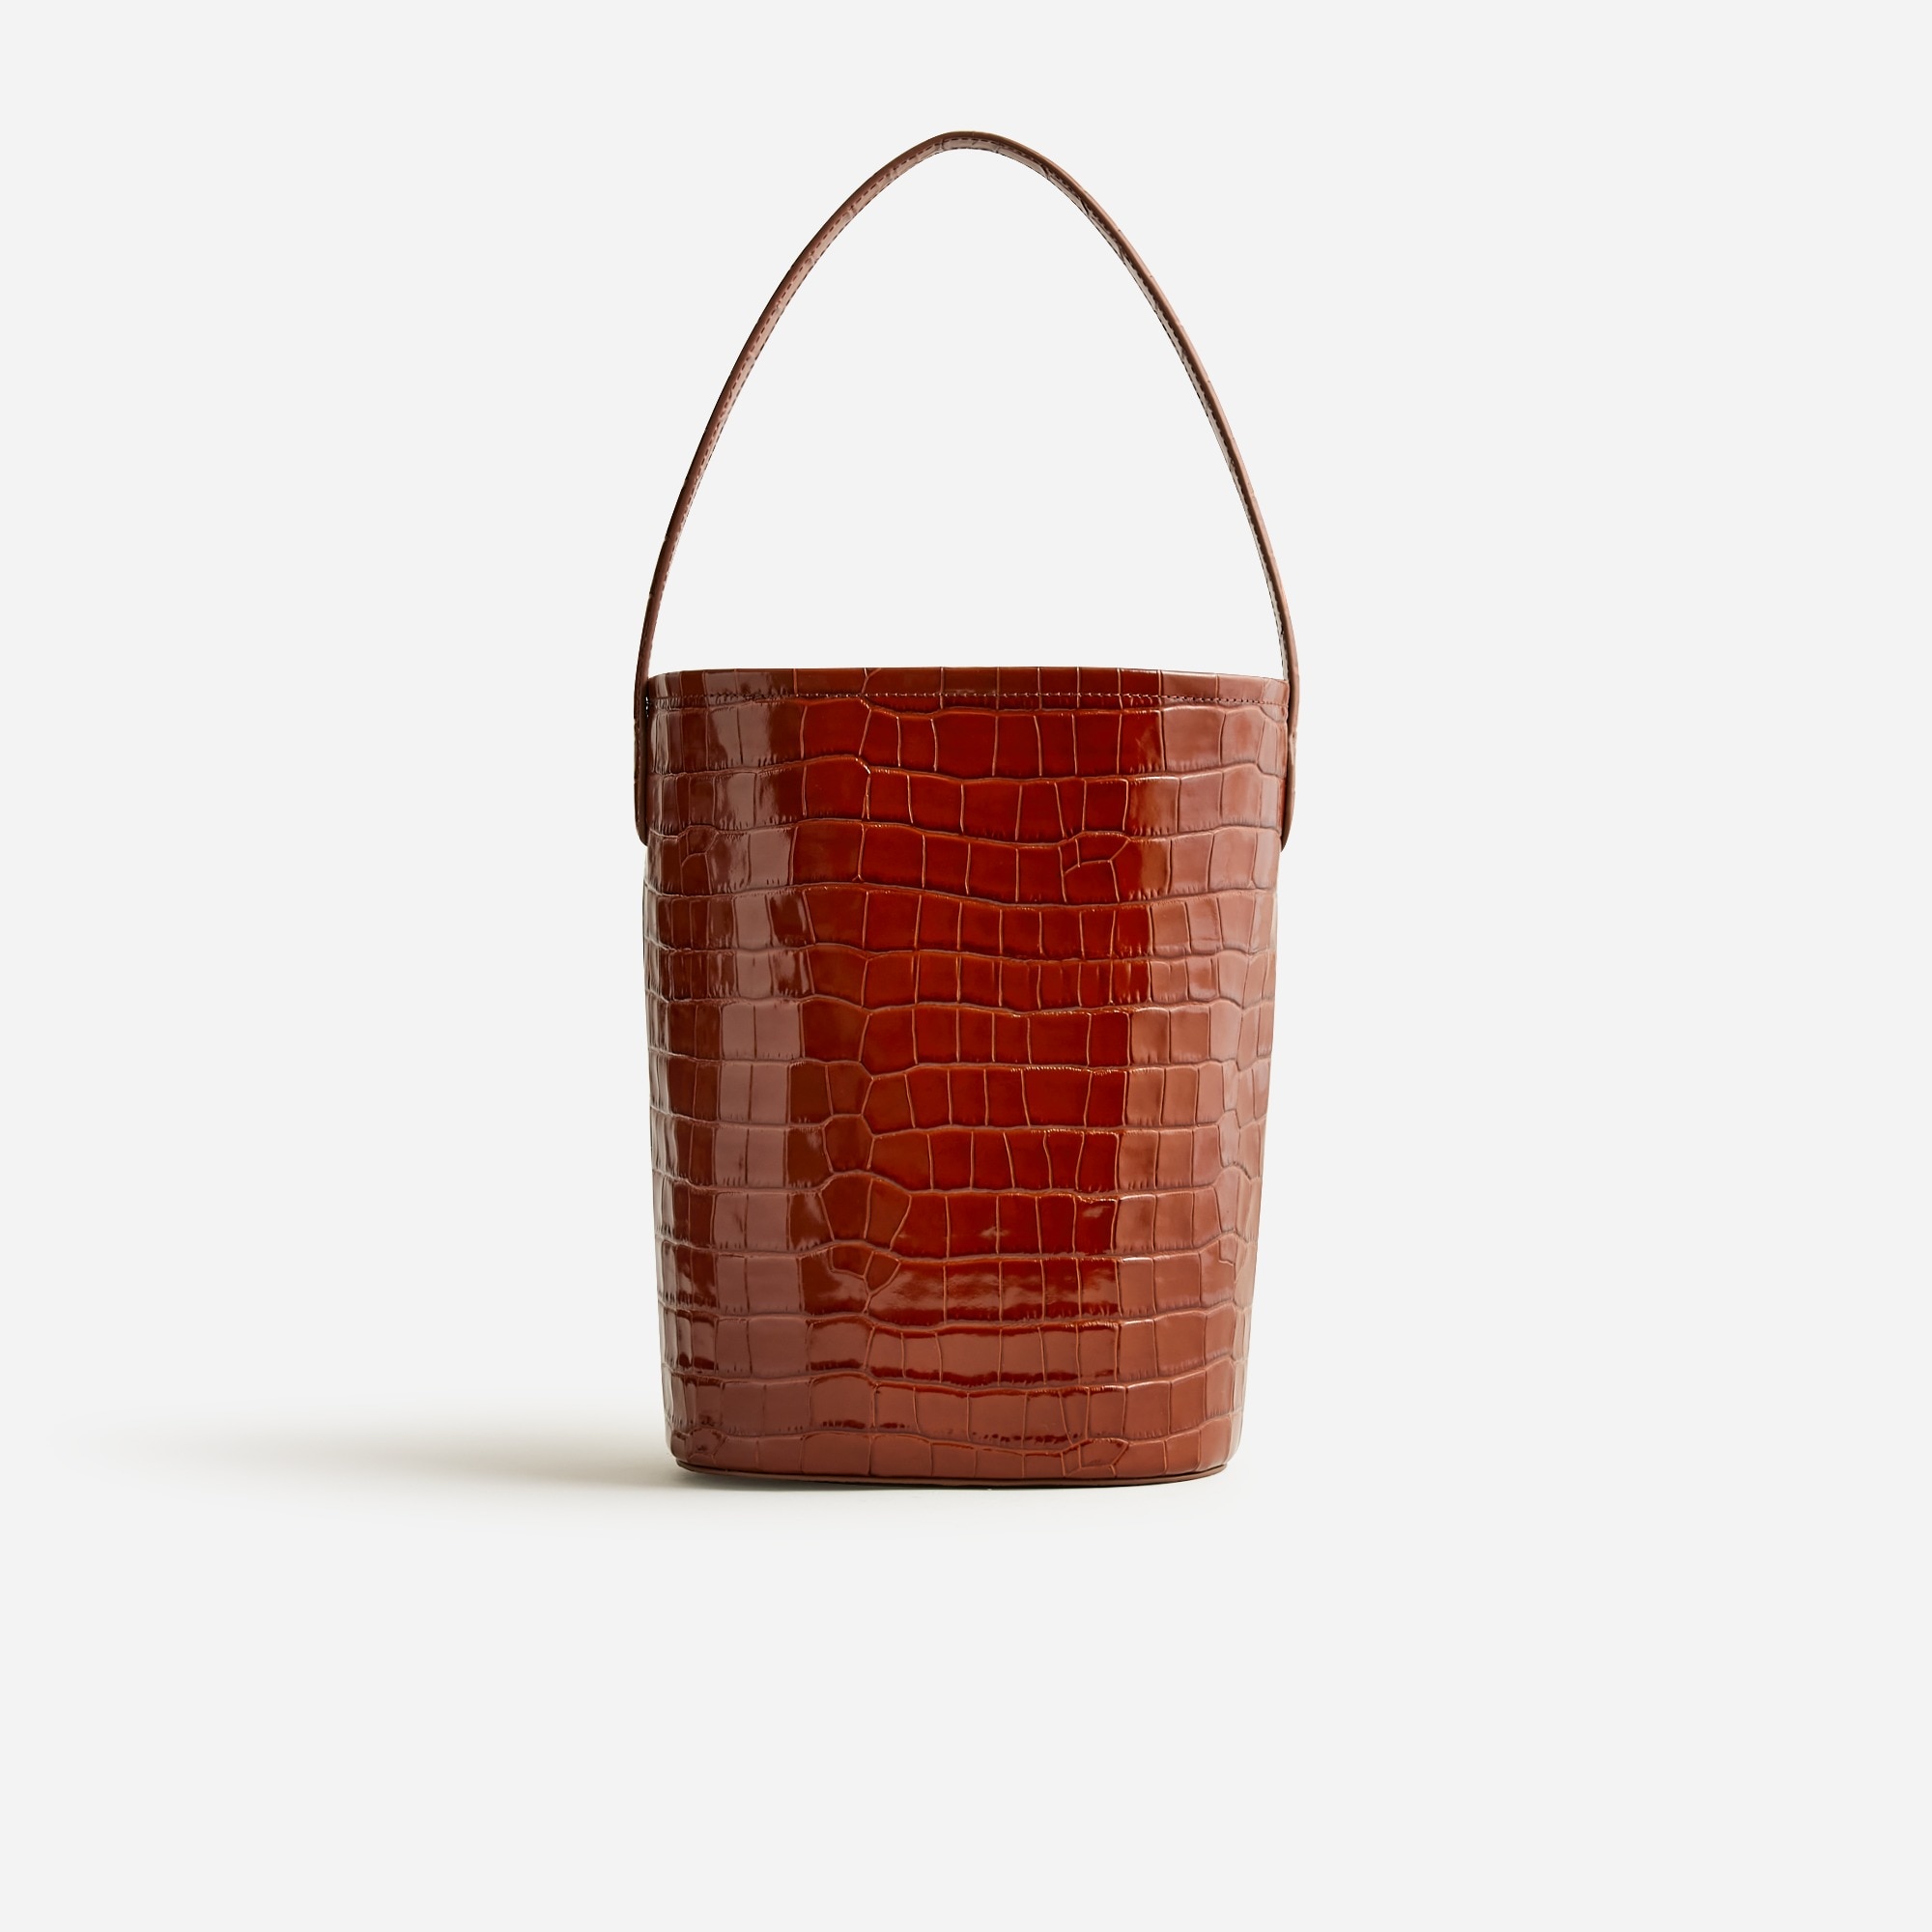  Berkeley bucket bag in Italian croc-embossed leather